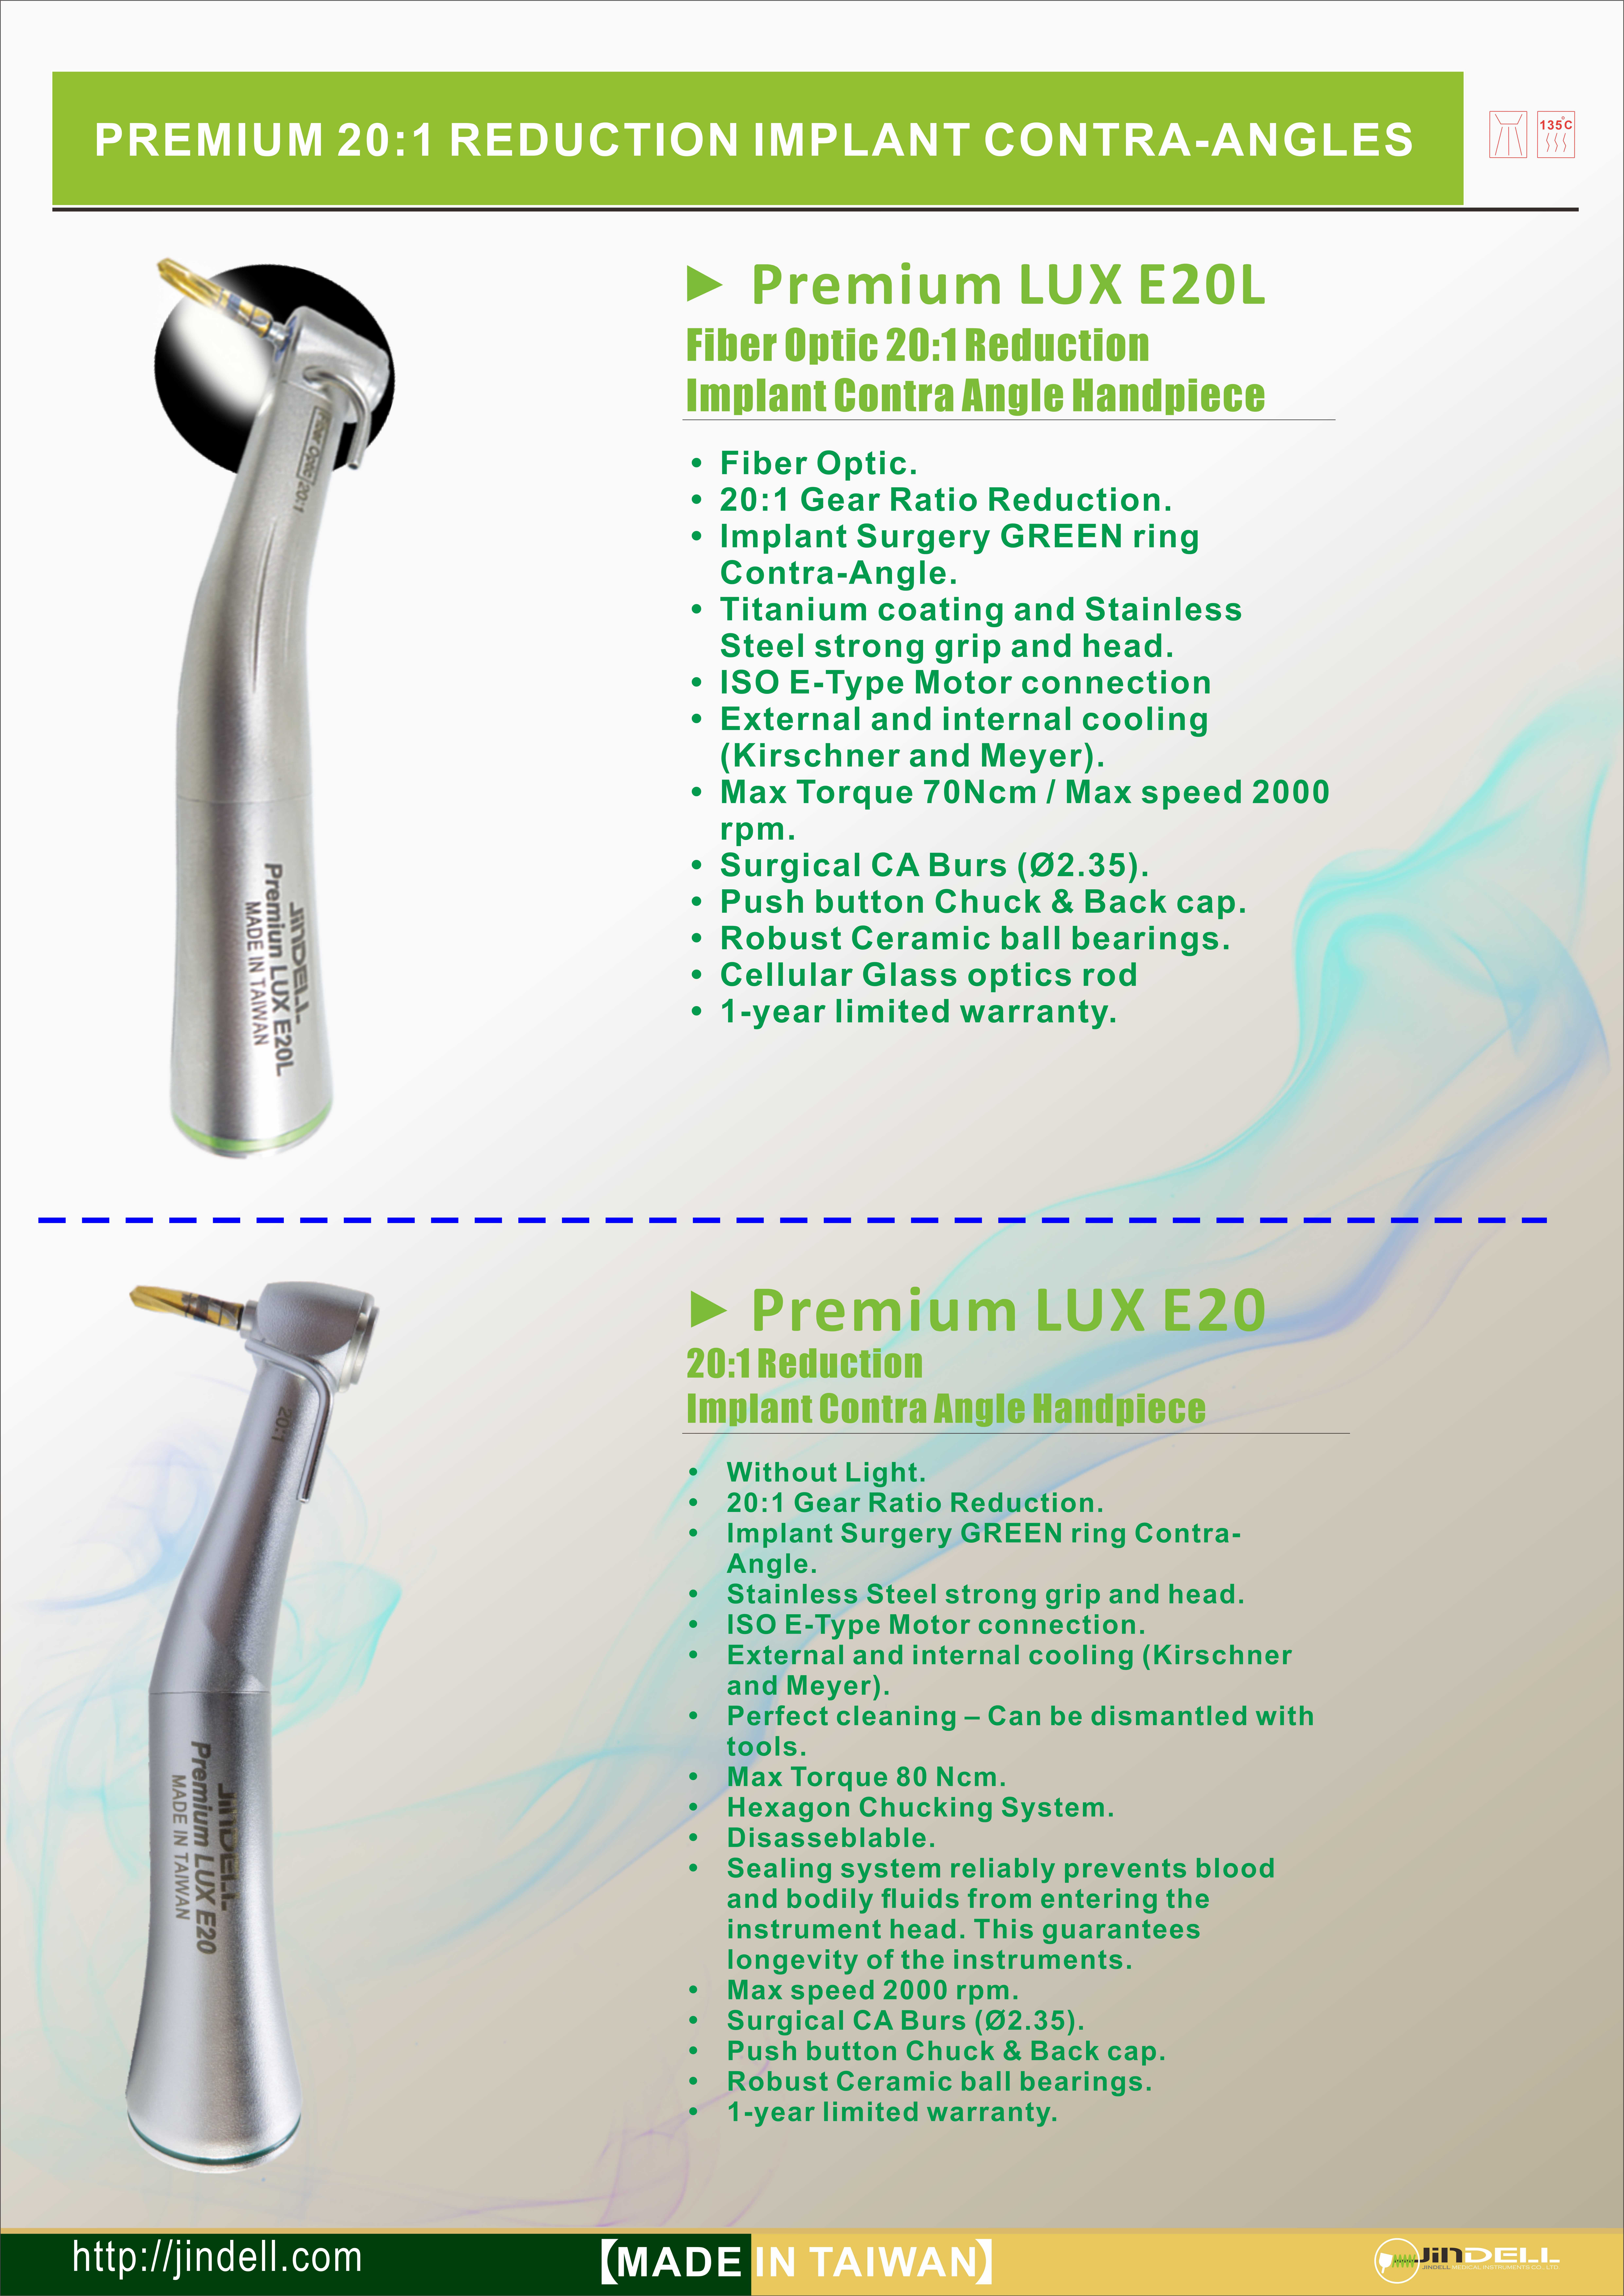 Premium LUX E20 series Reduction Implant Contra Angle